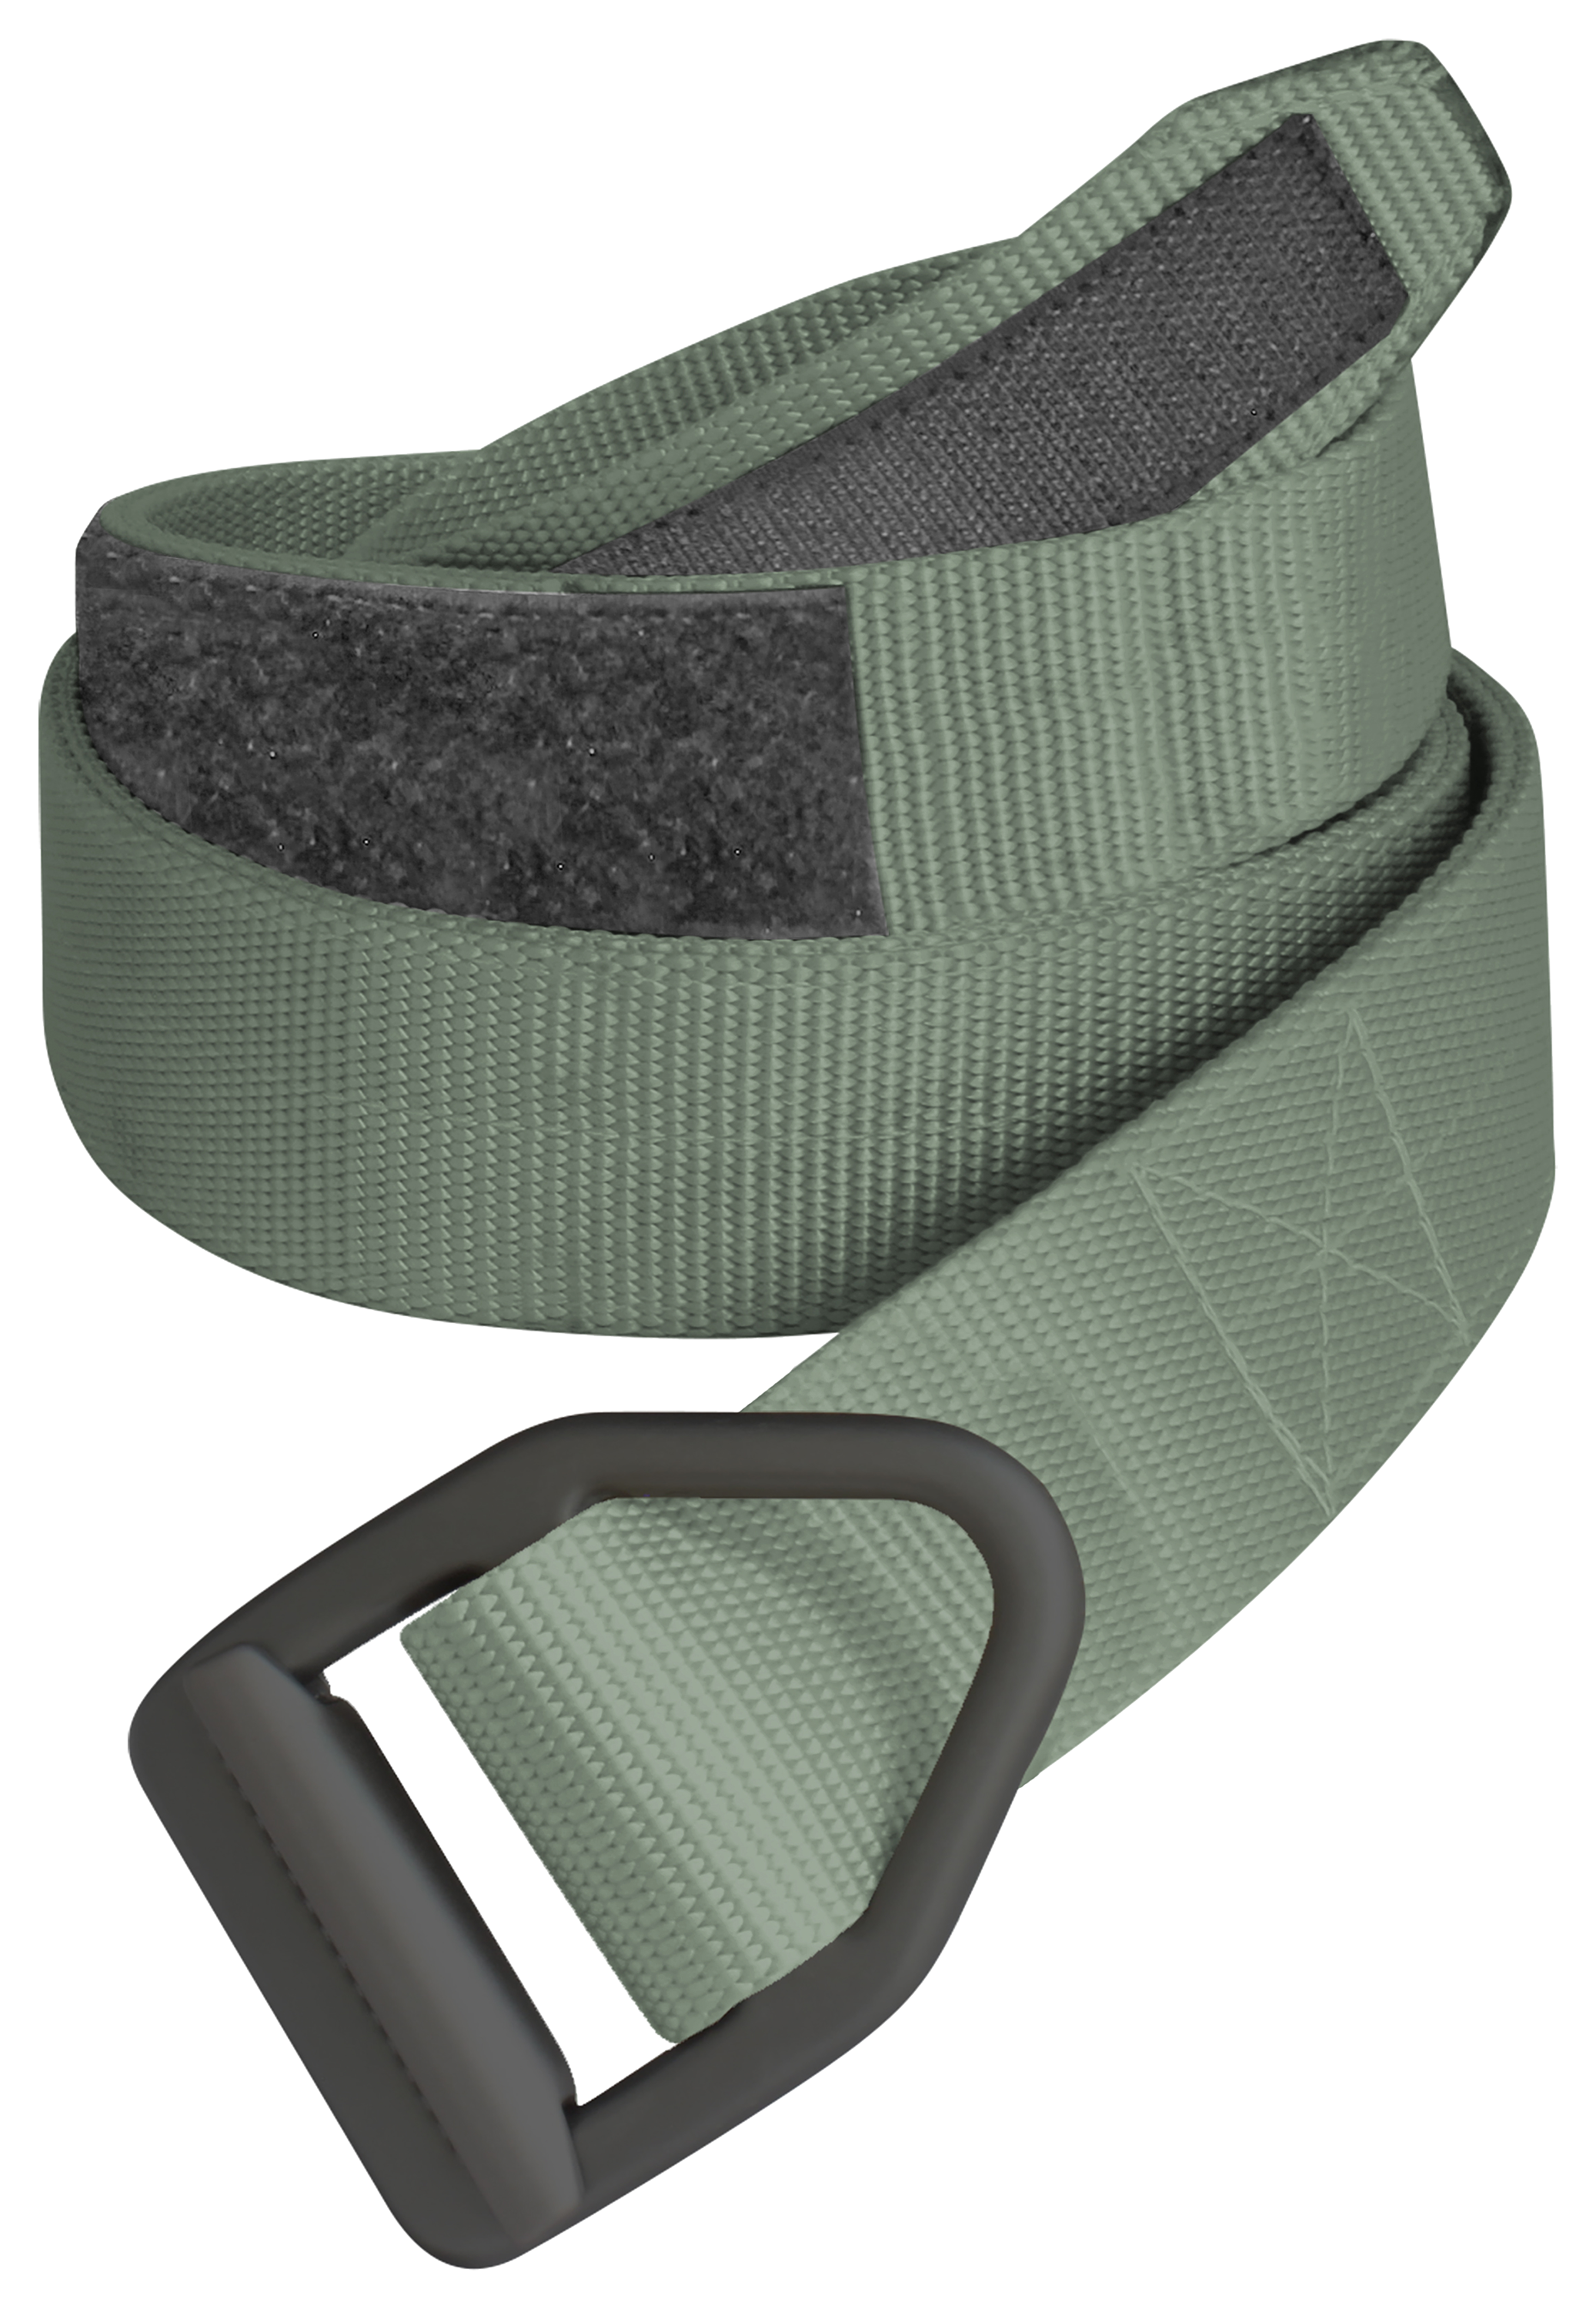 Bison Designs Last Chance Heavy-Duty Belt for Men - Olive - S